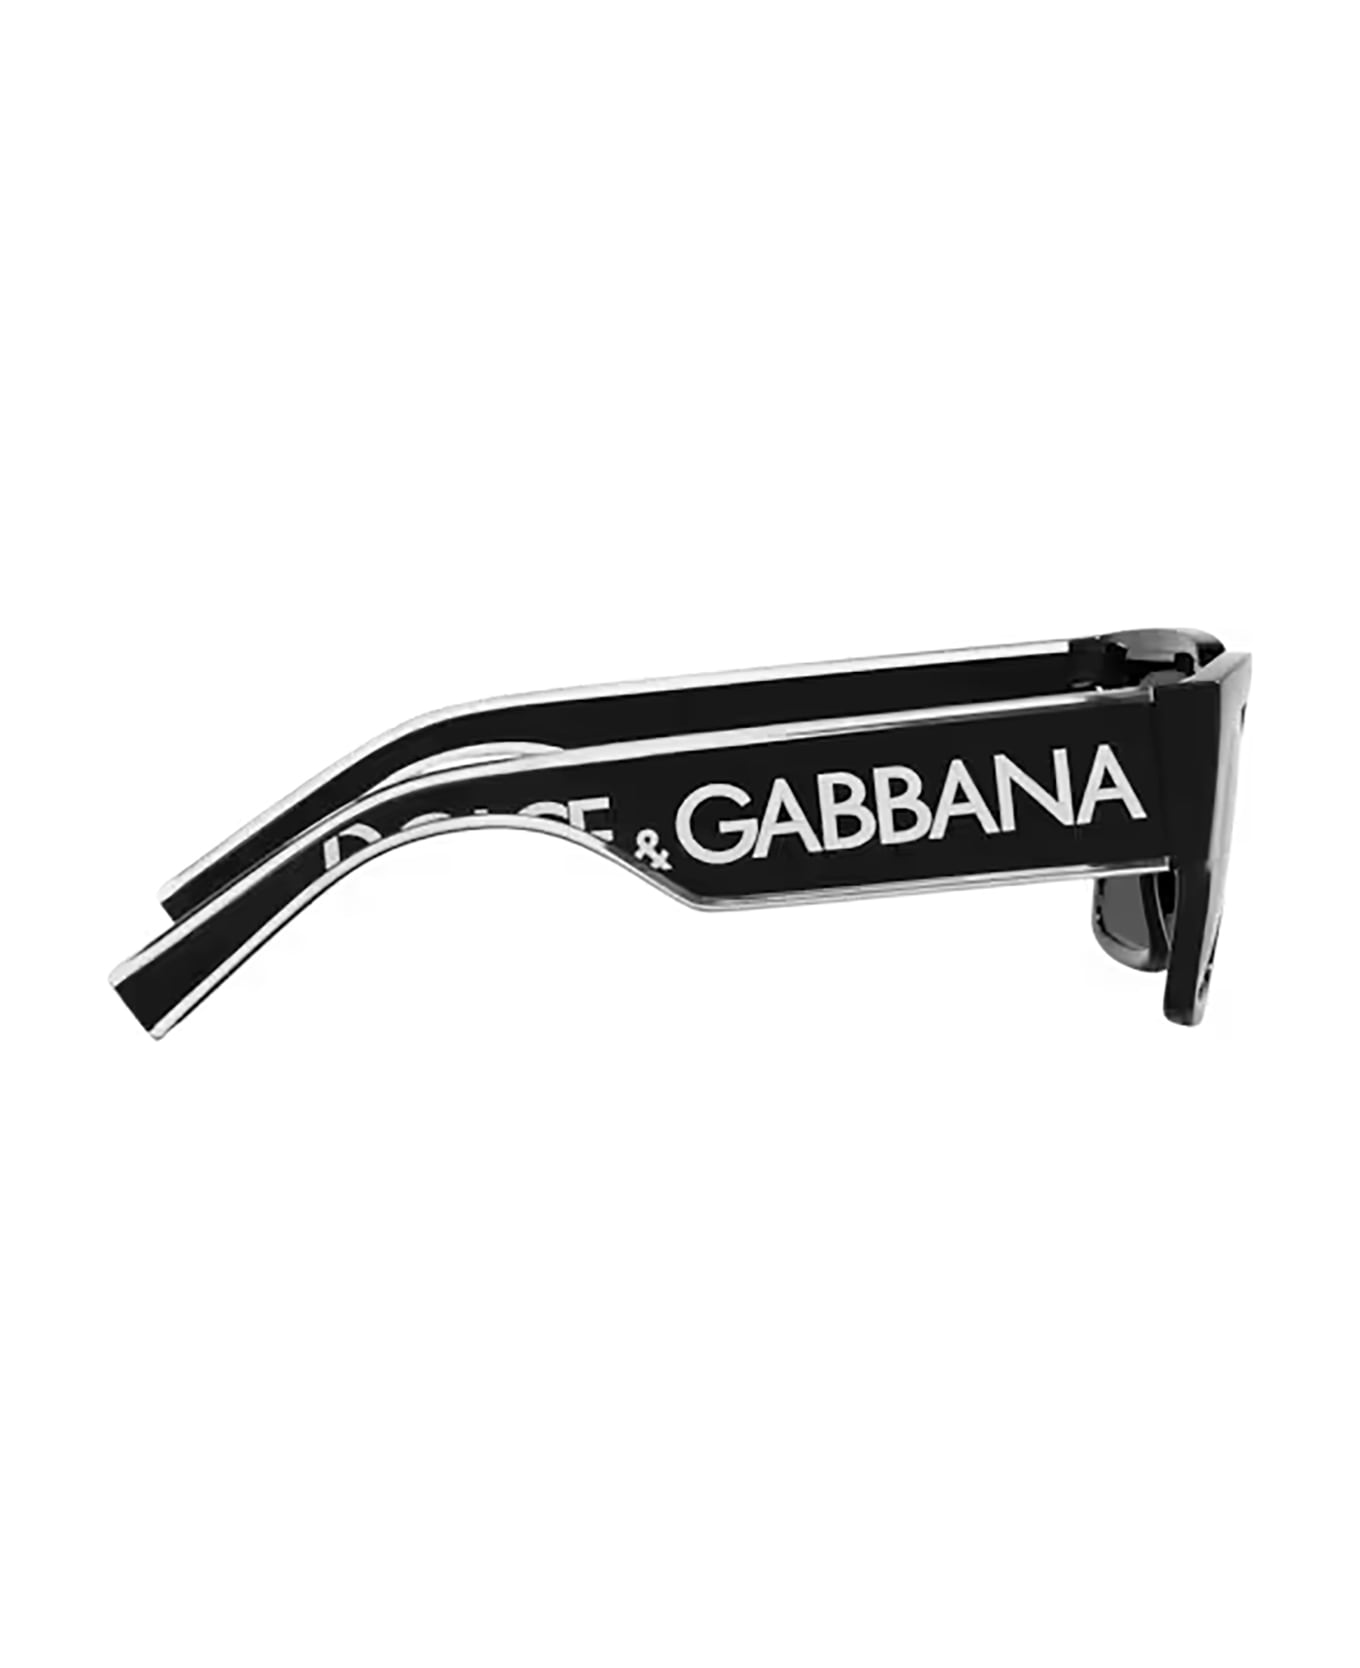 Dolce & Gabbana Eyewear Dg6184 Black Sunglasses - Black